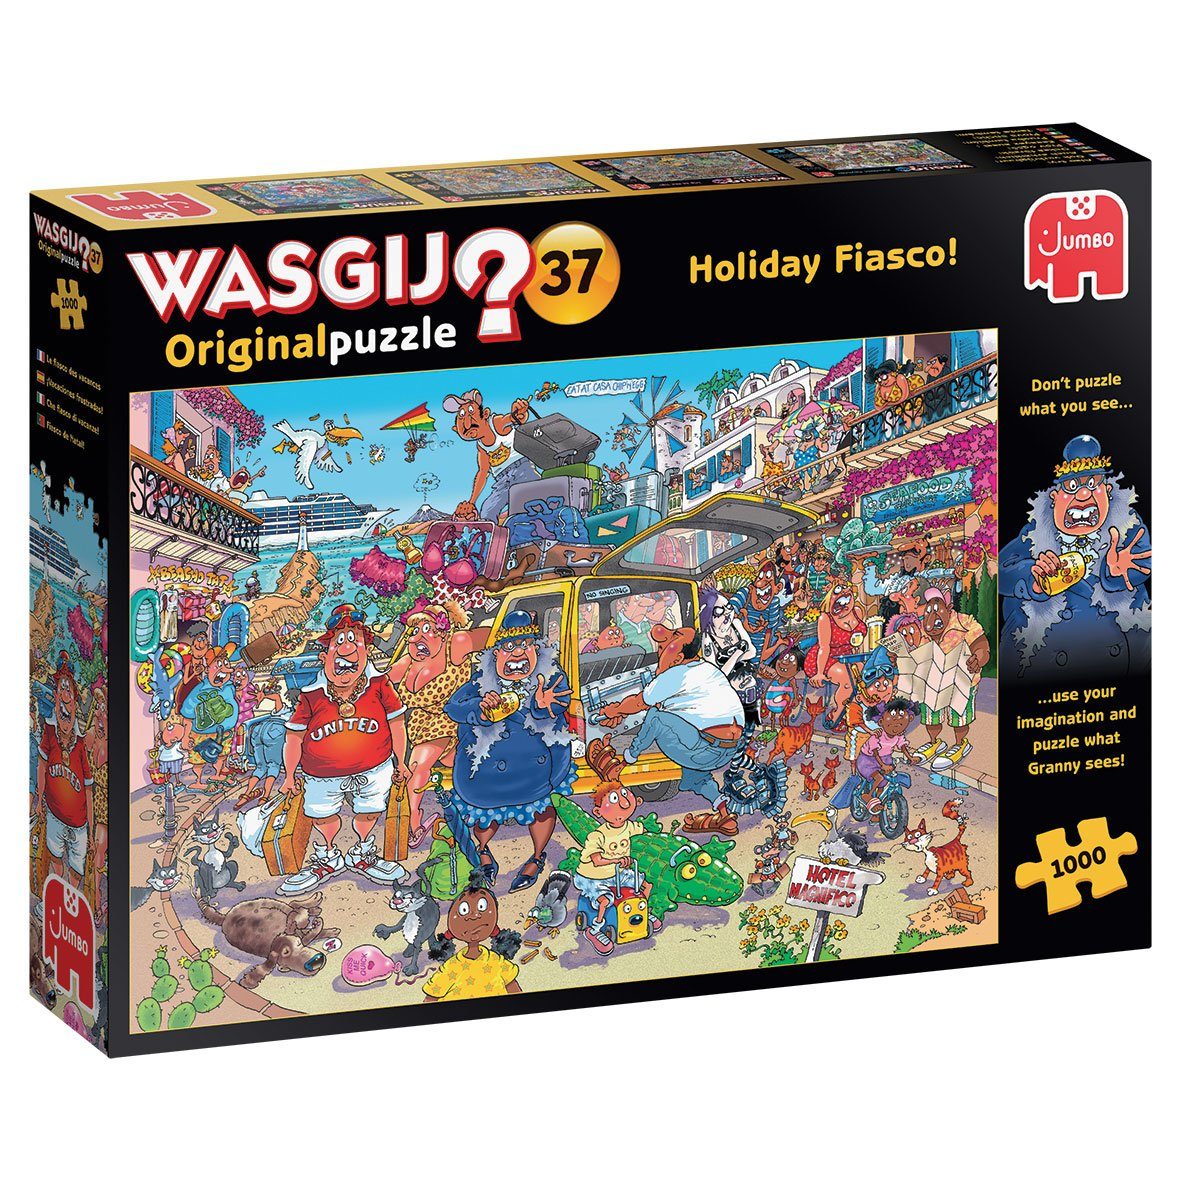 Jumbo Spiele Puzzleteile, was 1000 Fiasco!, Oma Wasgij 37 25004 sieht. die Holiday Original Puzzle Sie Puzzeln